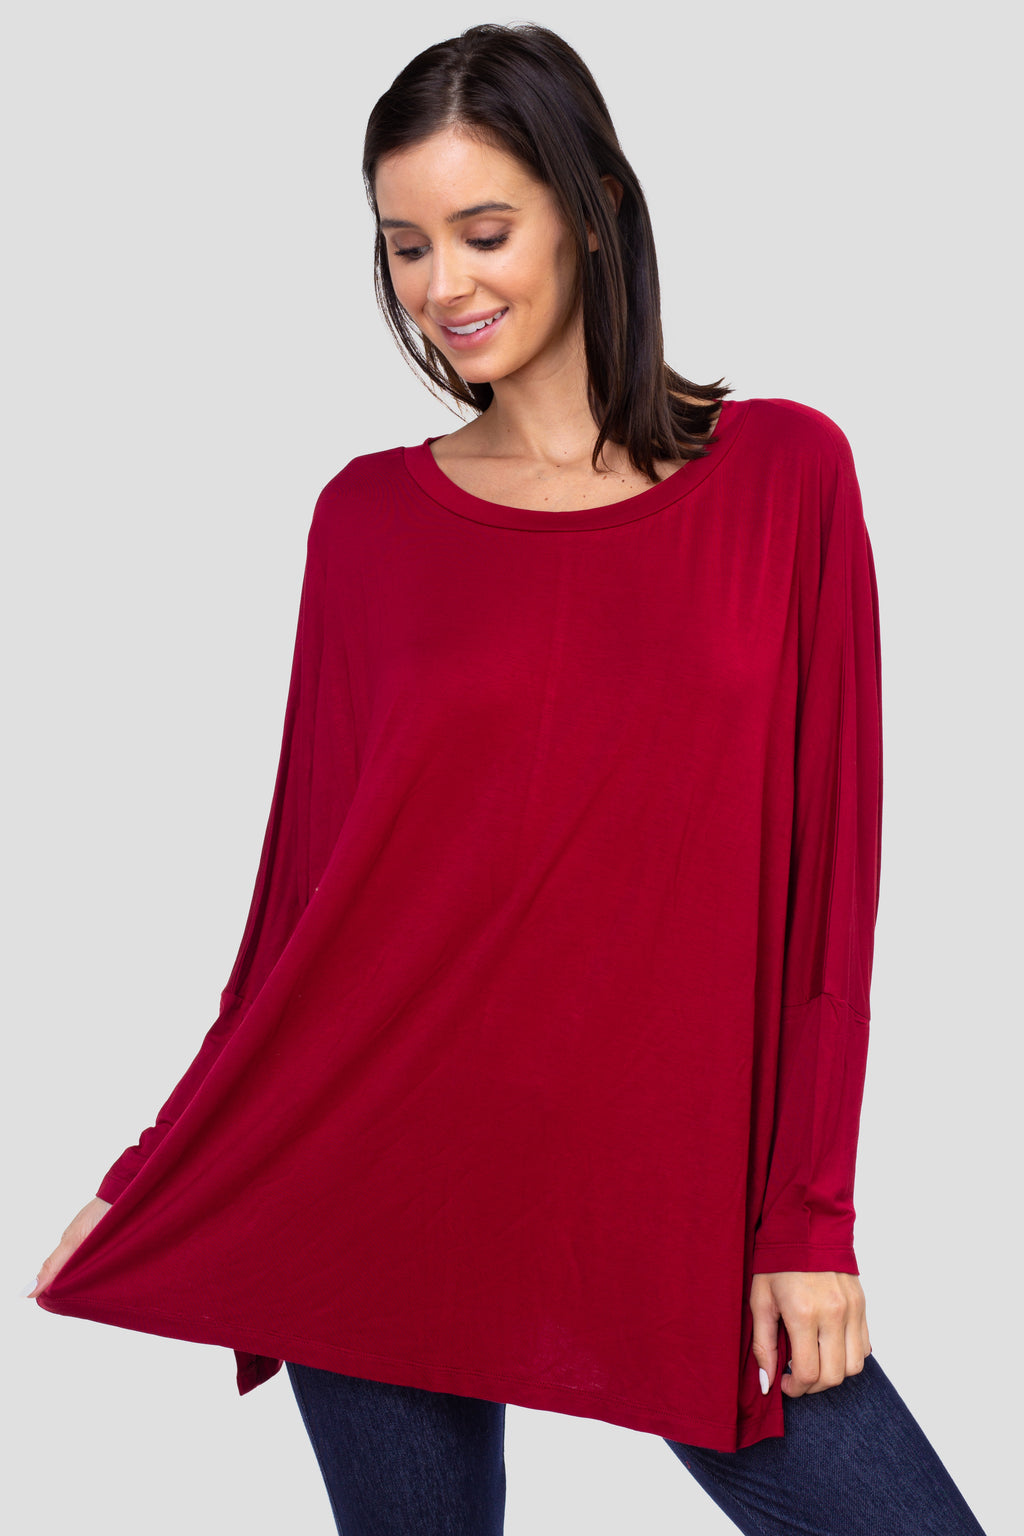 wine red dolman shirt for women